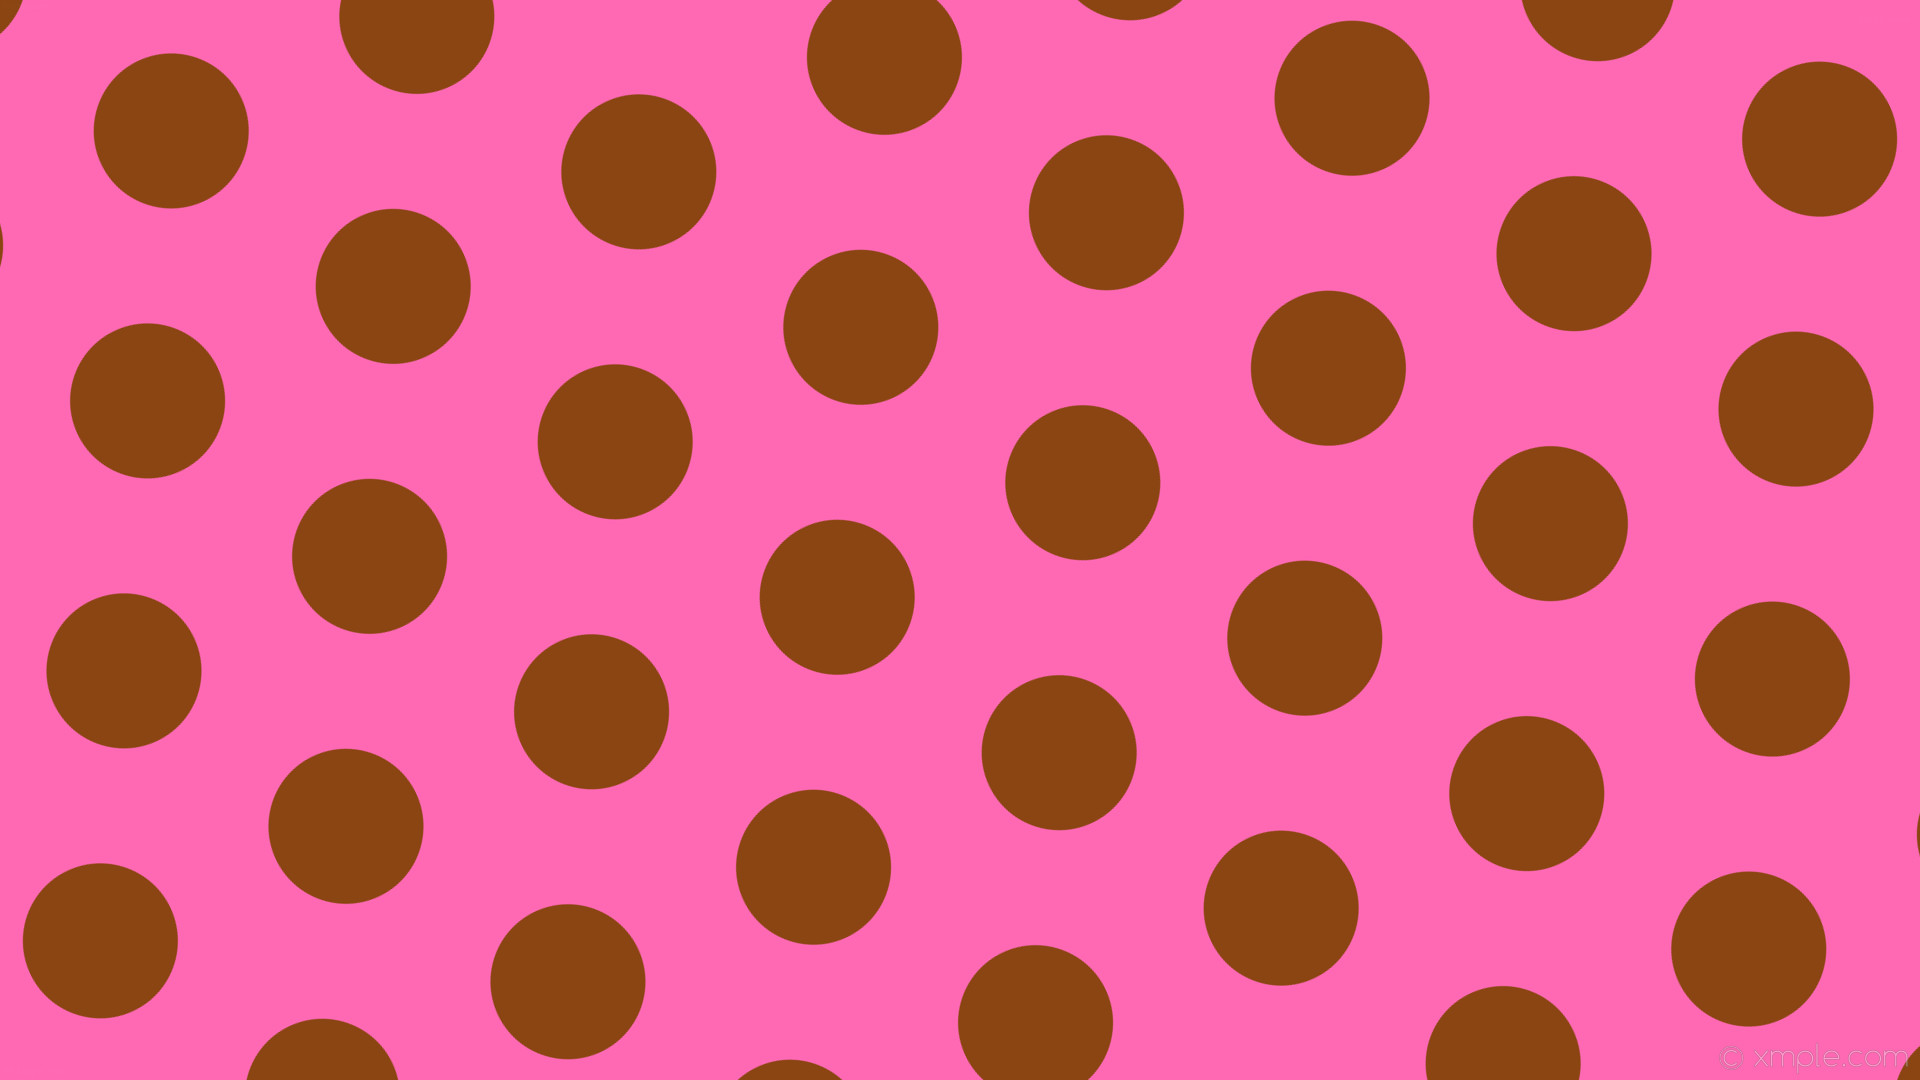 1920x1080 wallpaper polka dots brown pink hexagon hot pink saddle brown ff69b4 8b4513 diagonal